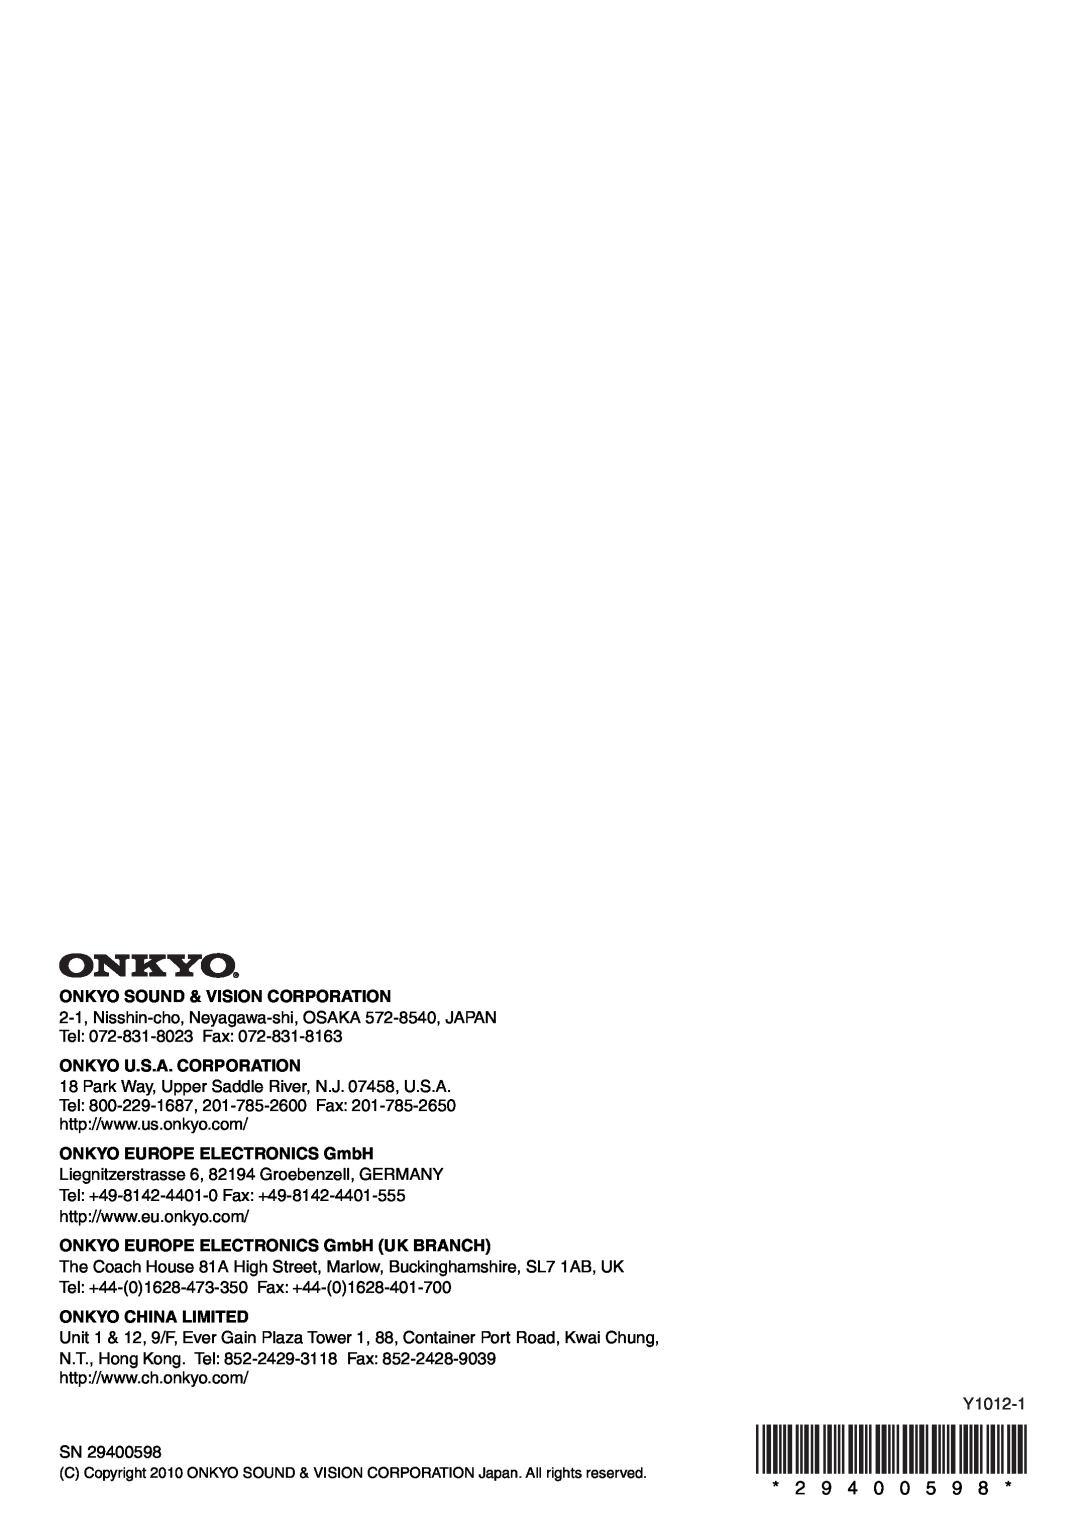 Onkyo HT-R390 2 9, Onkyo Sound & Vision Corporation, Onkyo U.S.A. Corporation, ONKYO EUROPE ELECTRONICS GmbH 